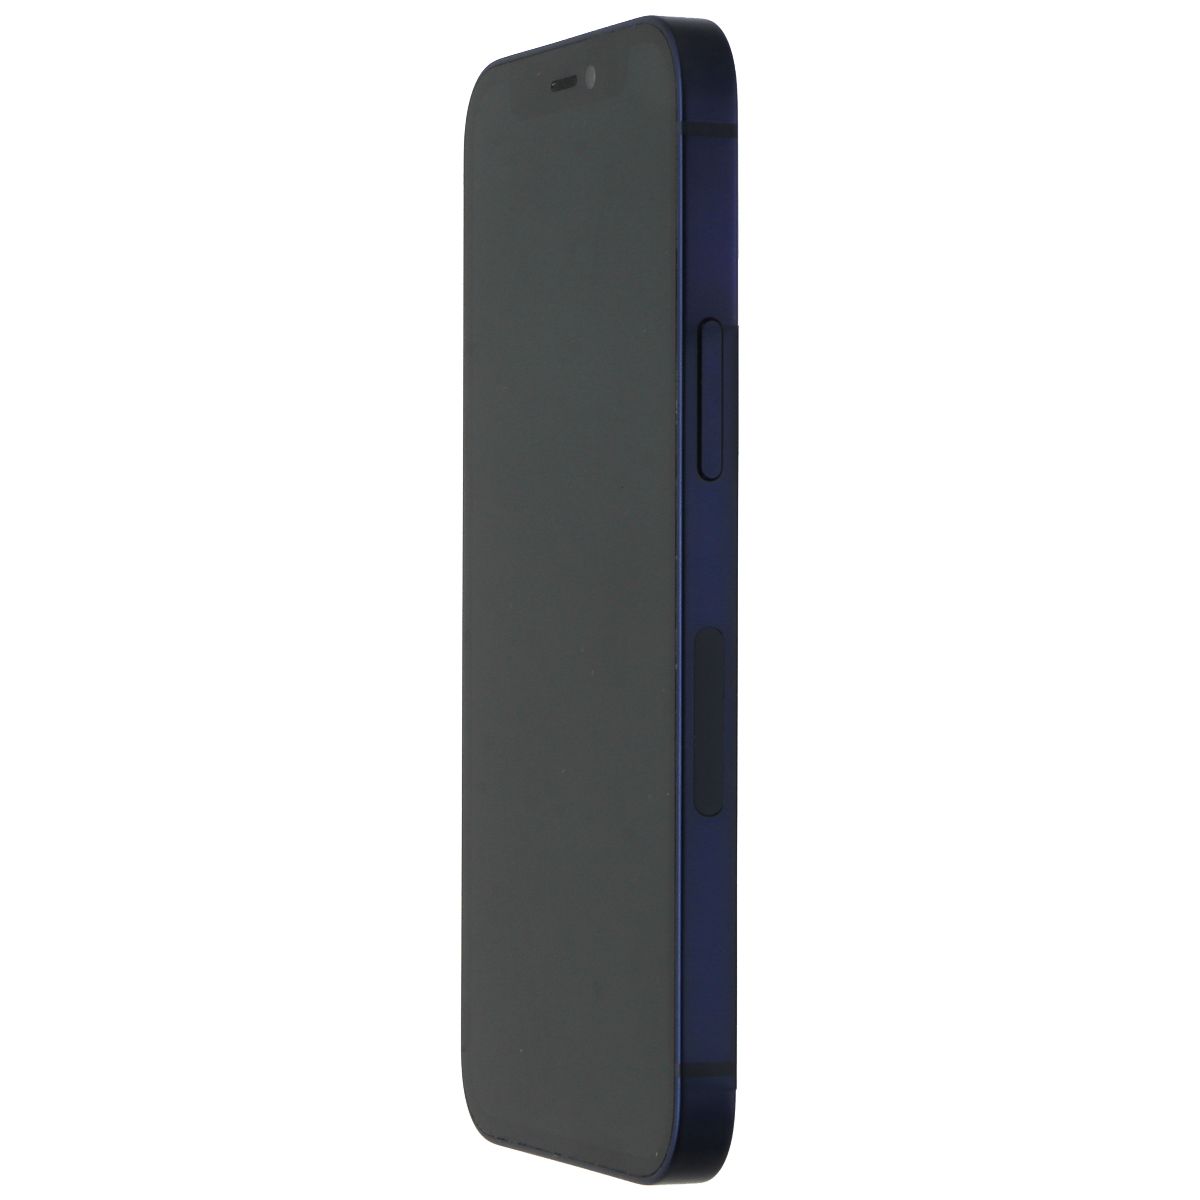 Apple iPhone 12 mini (5.4-inch) Smartphone (A2176) METRO PCS - 128GB/Blue Cell Phones & Smartphones Apple    - Simple Cell Bulk Wholesale Pricing - USA Seller